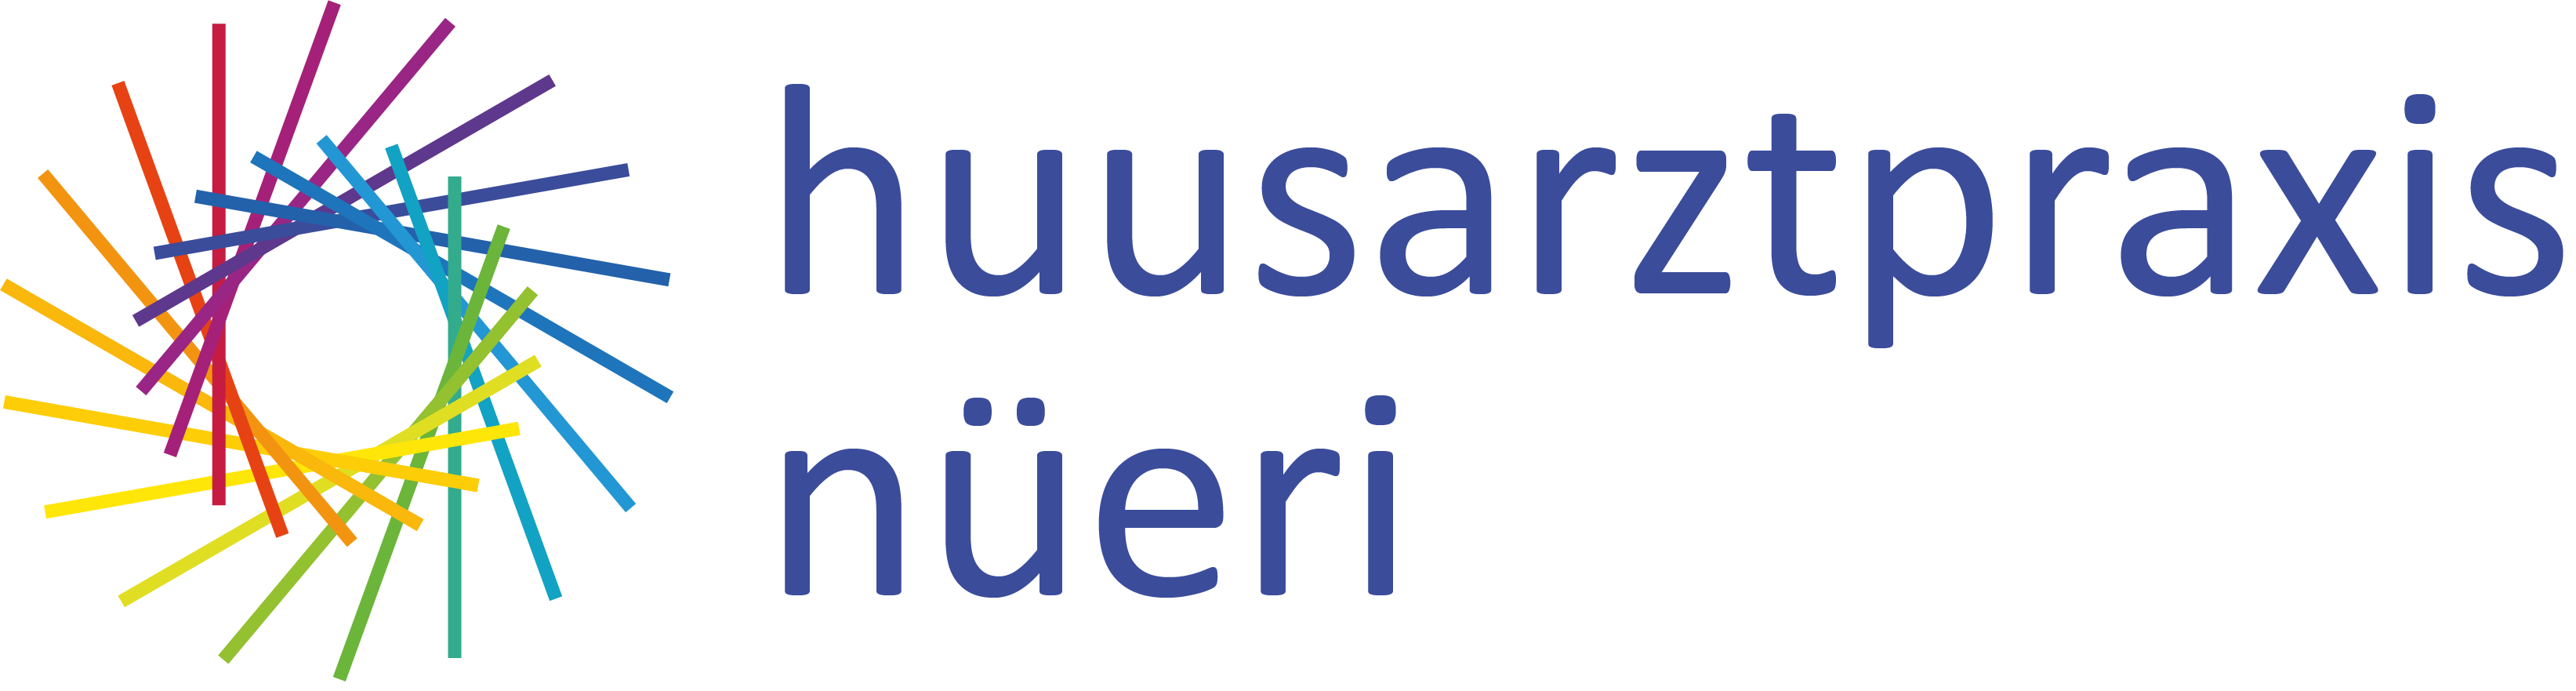 Logo-Huusarztpraxis-Nueeri-Querformat_v4.6.png